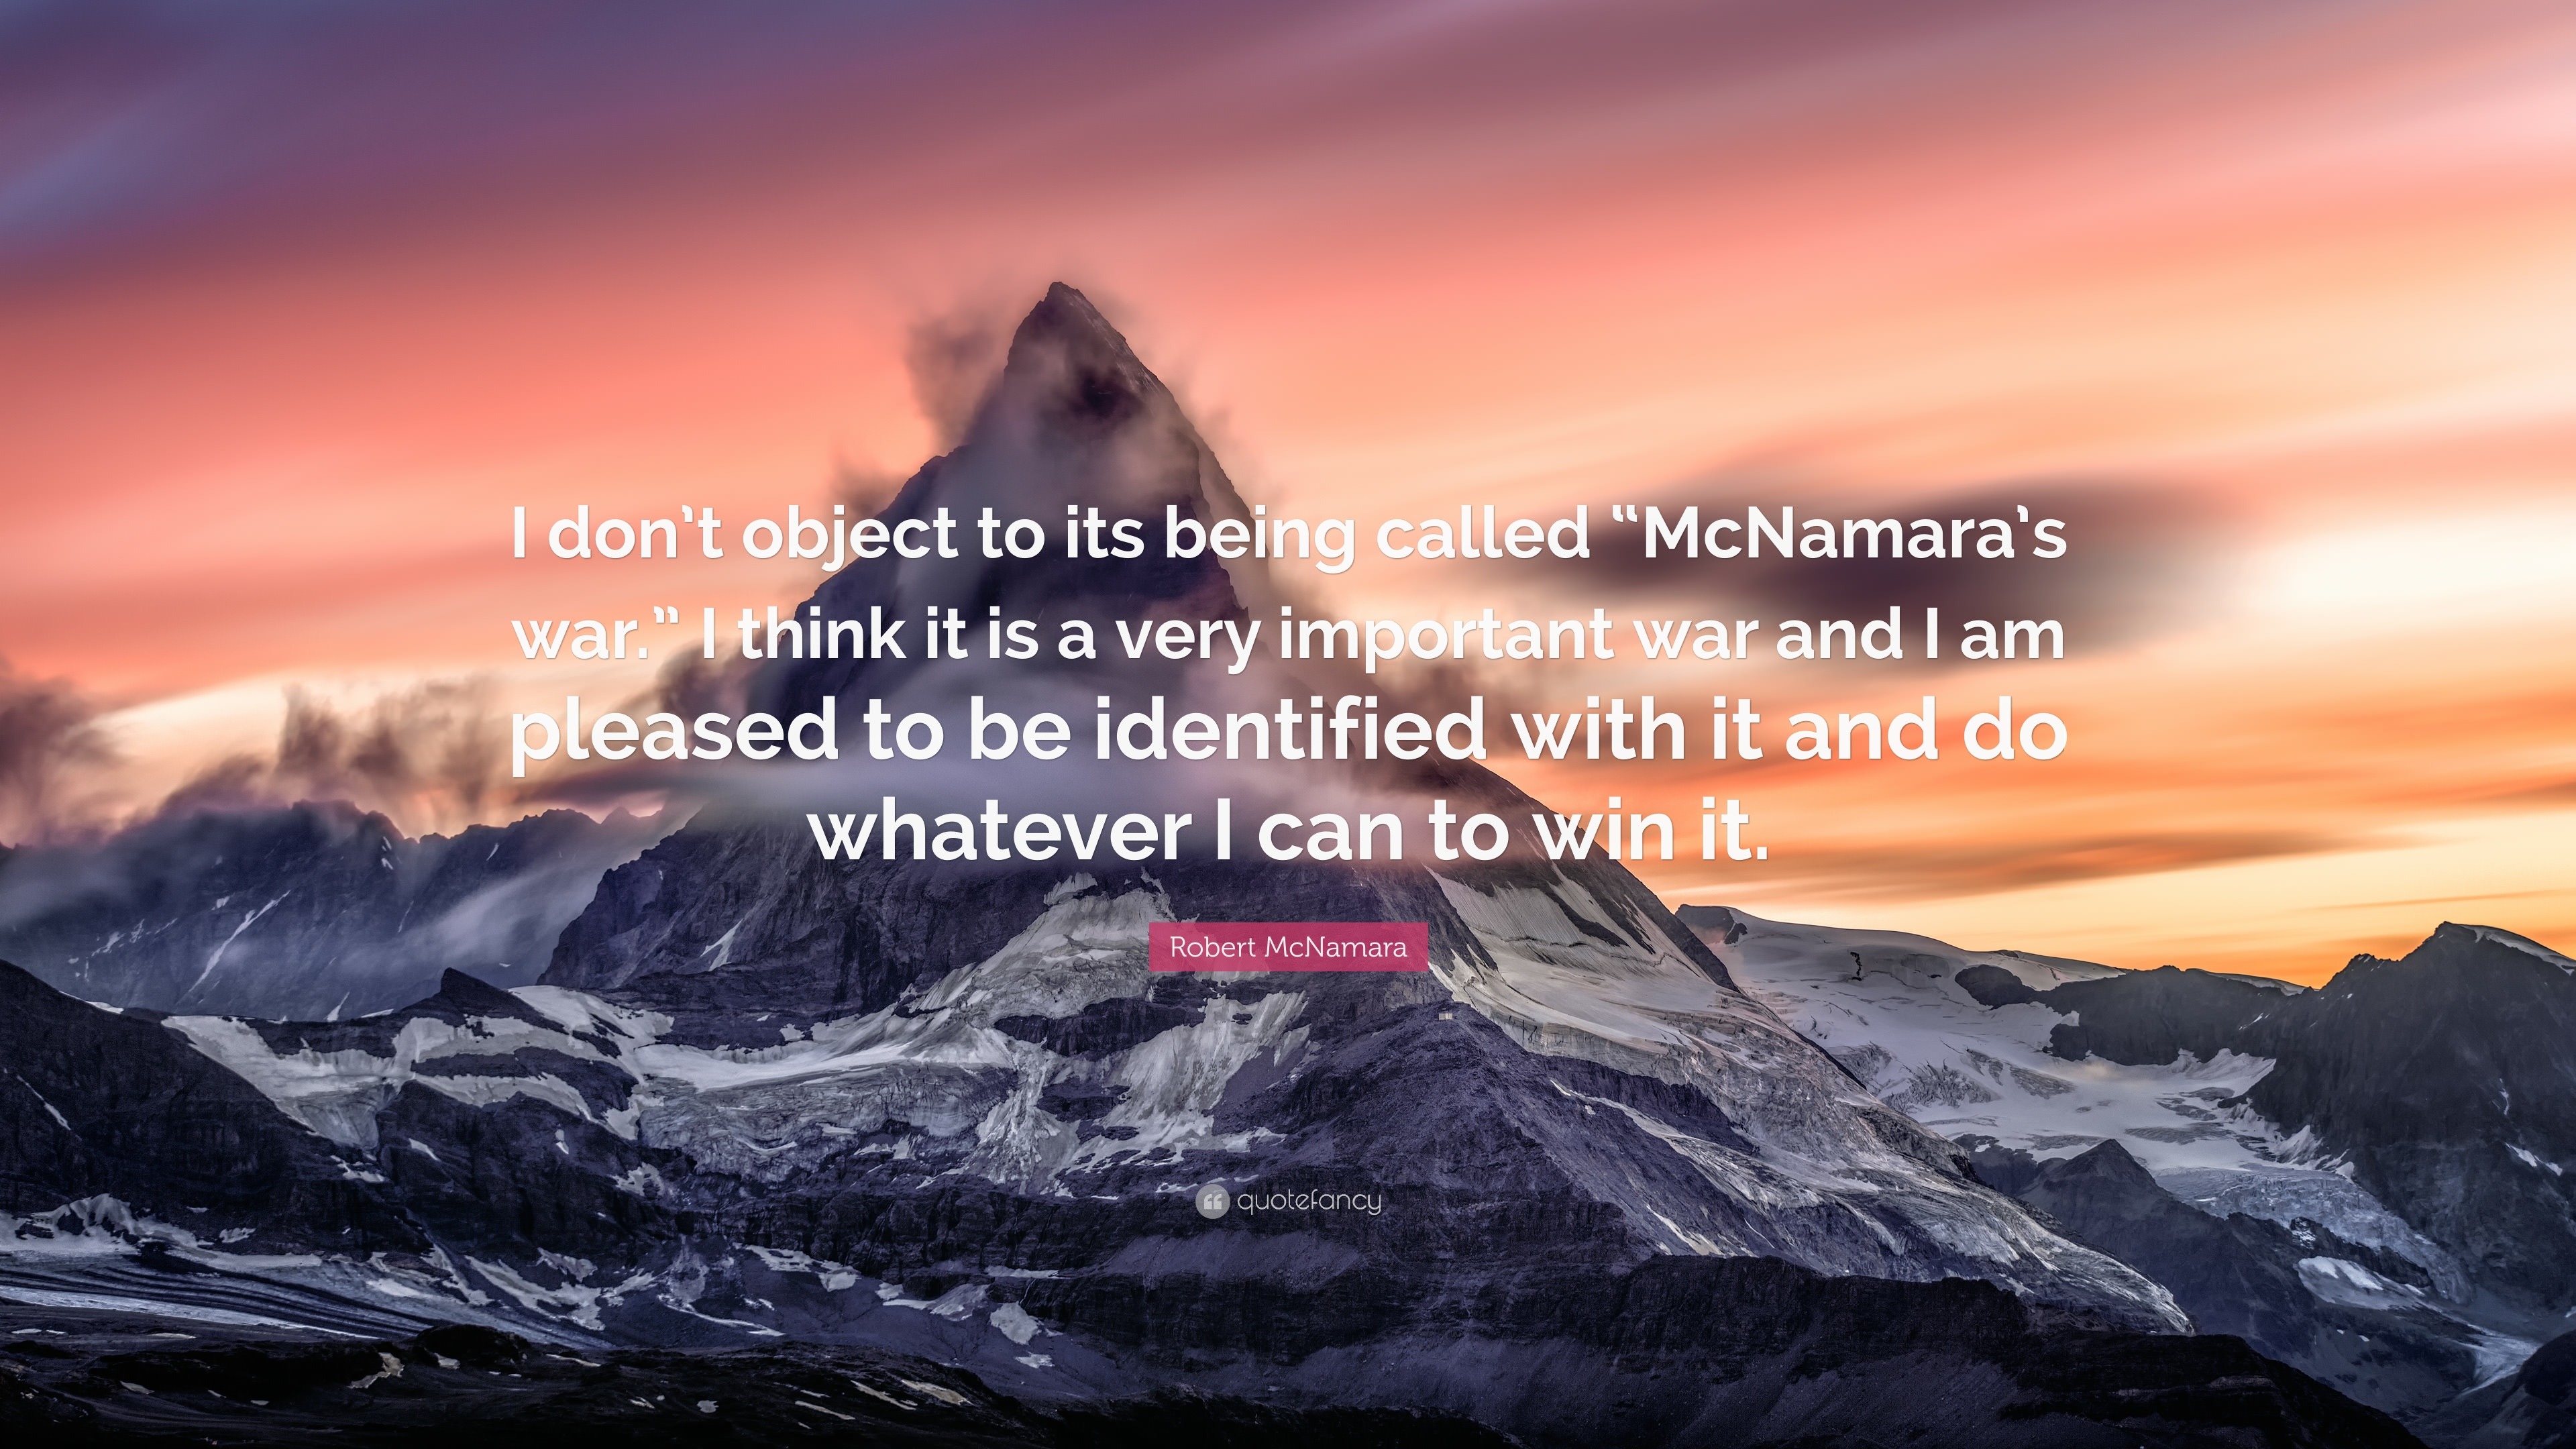 Robert McNamara Quote: “I don’t object to its being called “McNamara’s ...